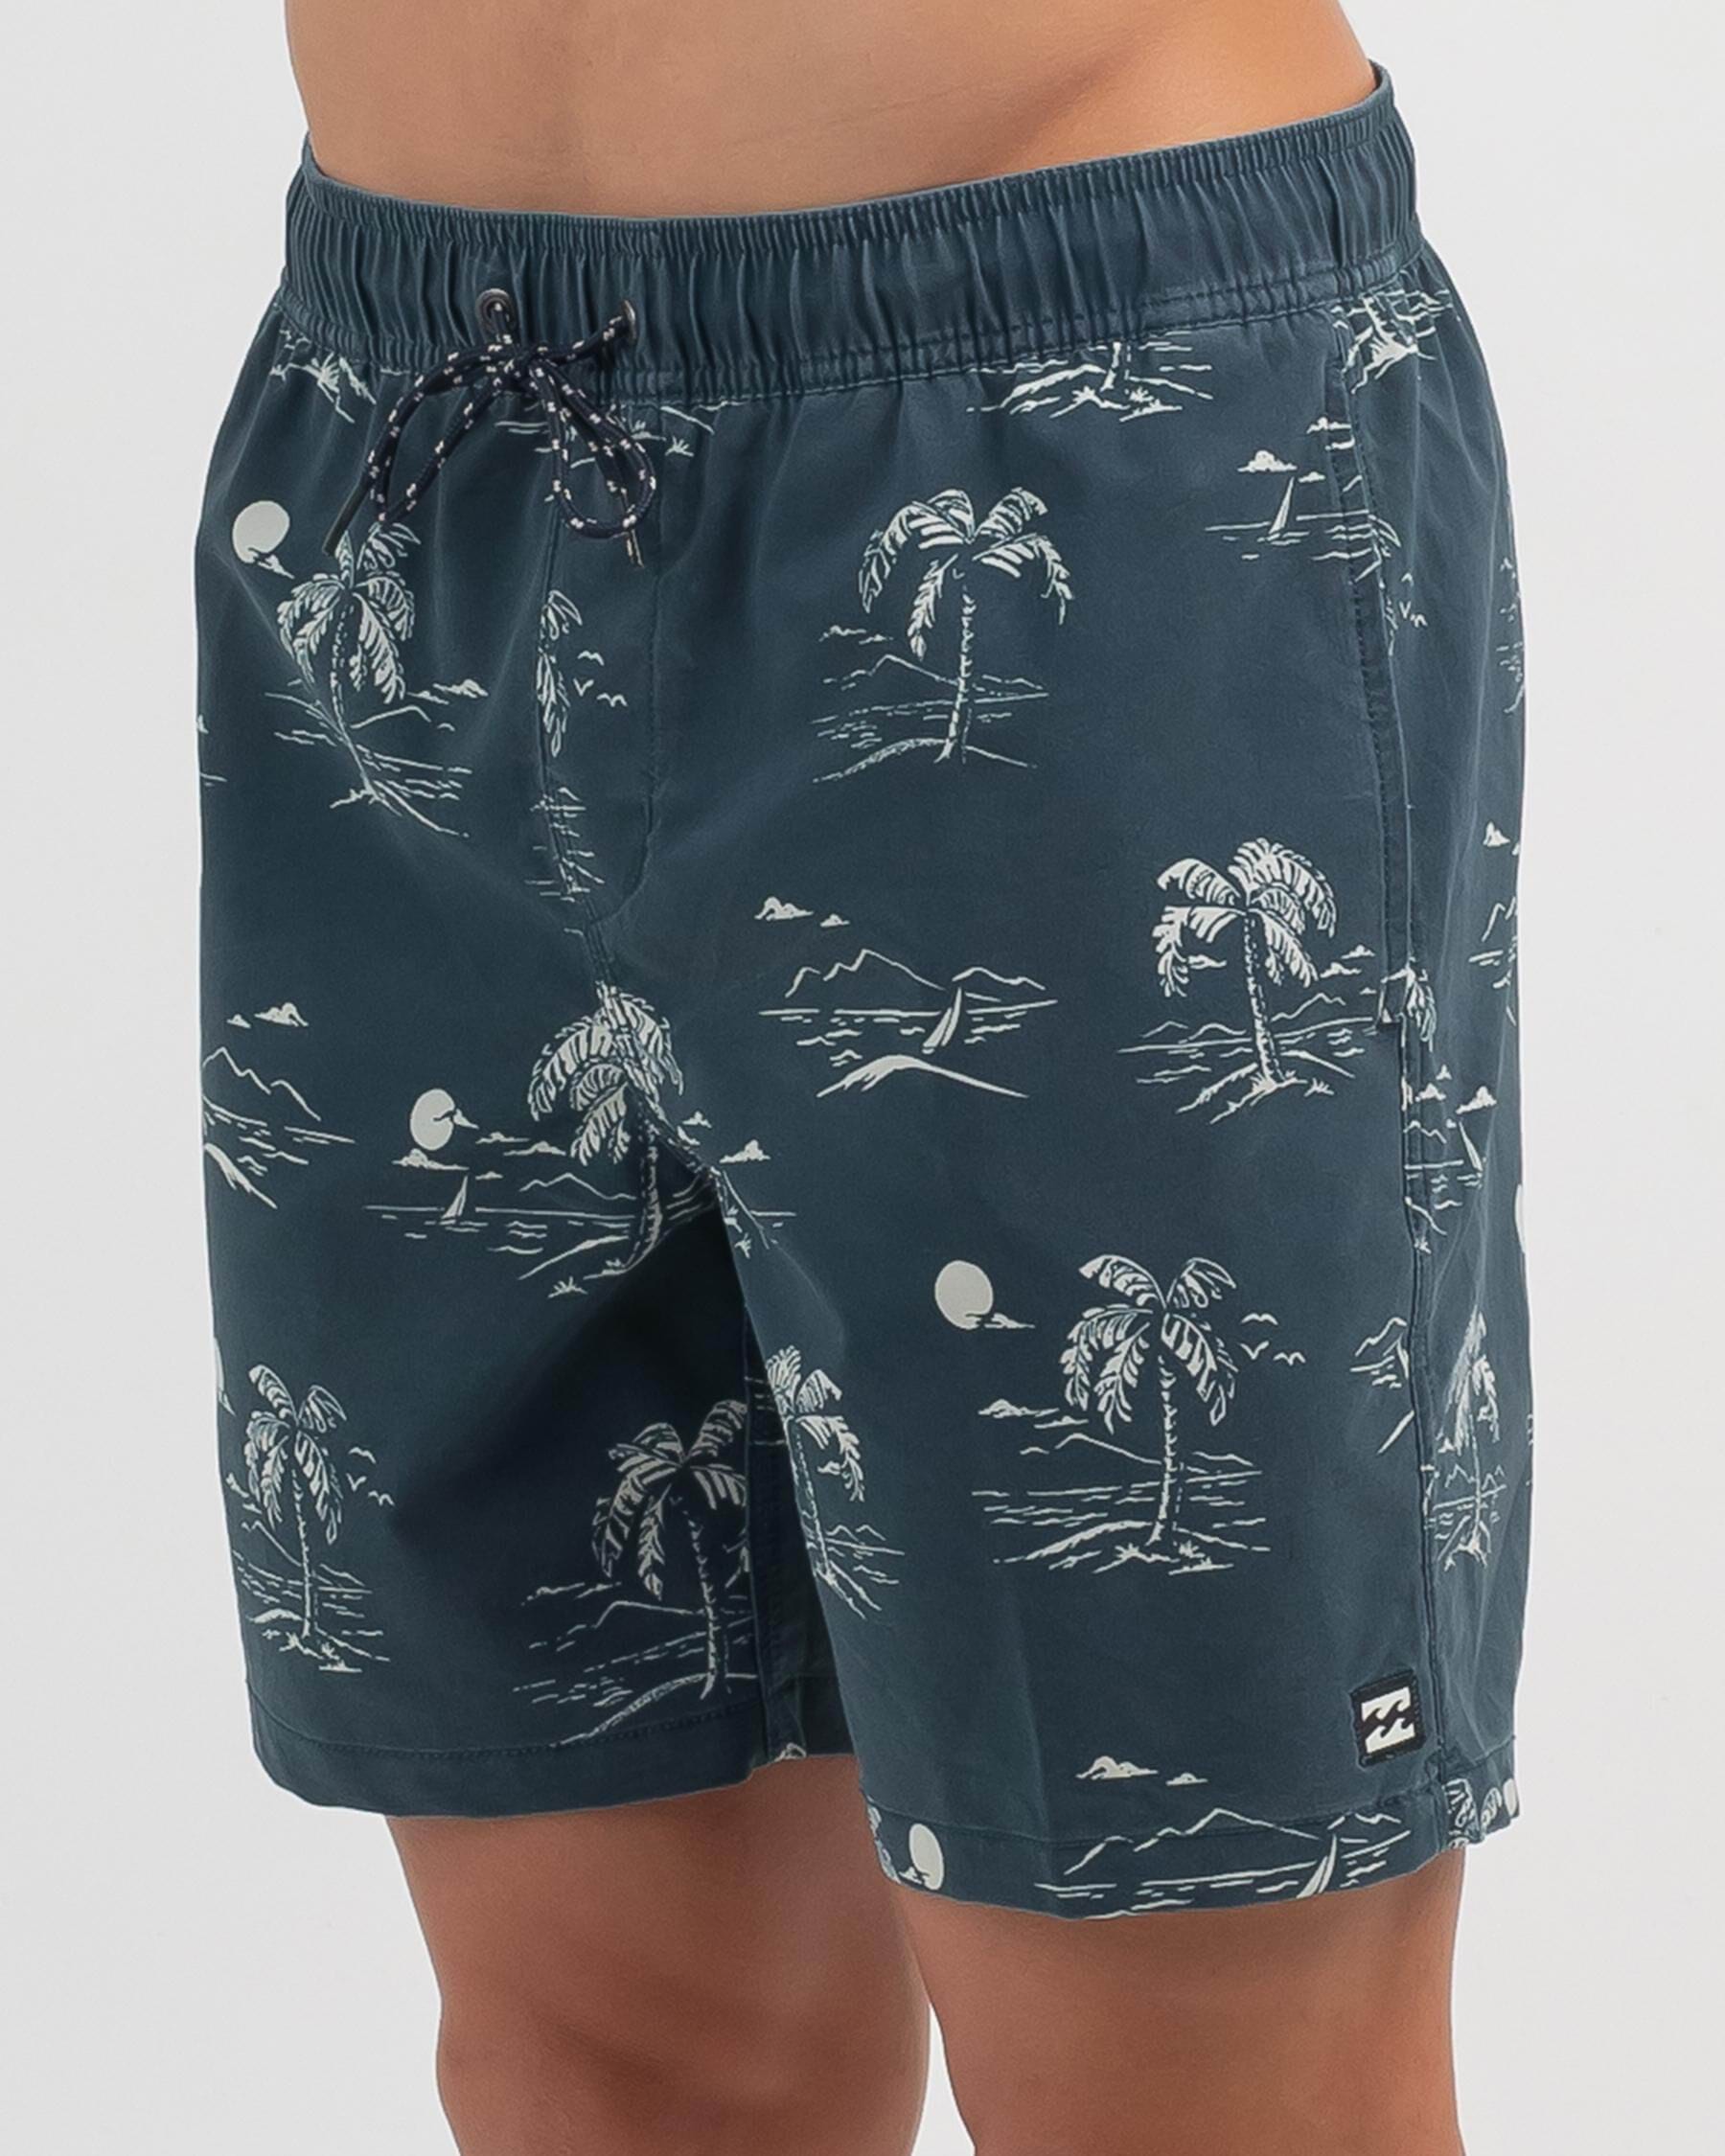 NASA Logo Van Gogh Man Summer Beach Shorts,Casual ShortsBeach Shorts Board Shorts White